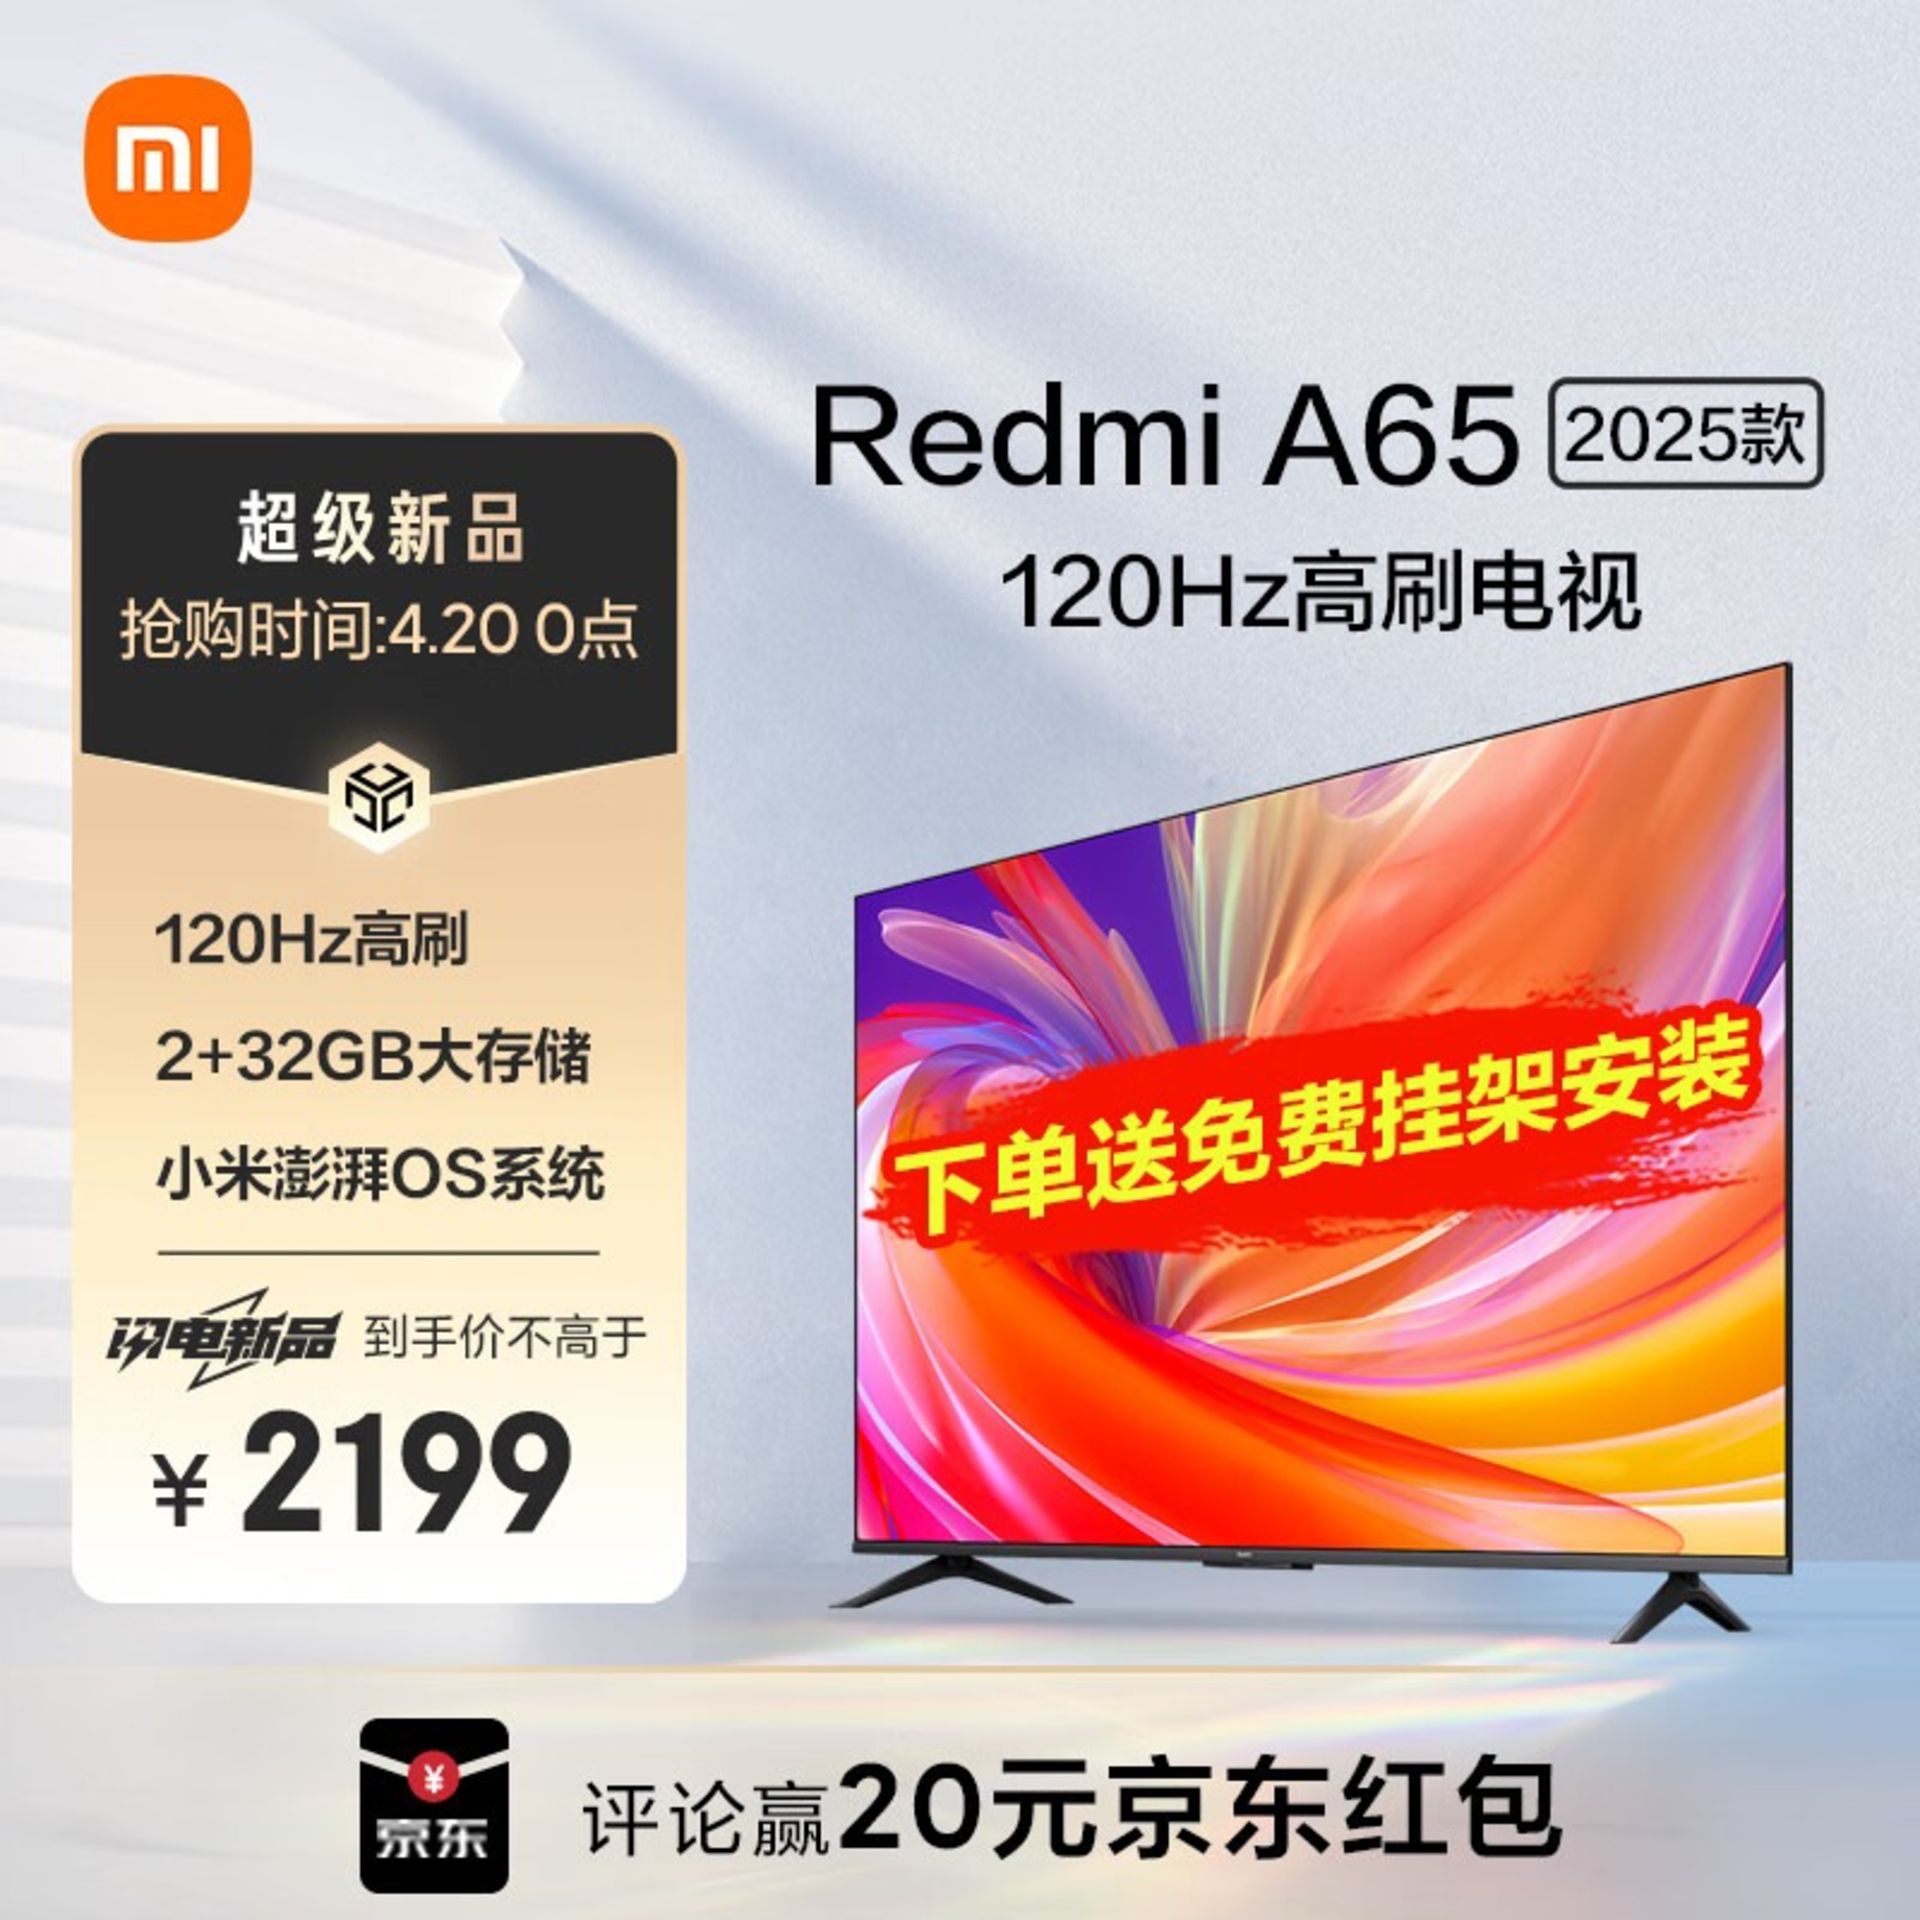 قیمت تلویزیون شیائومی مدل Redmi A65